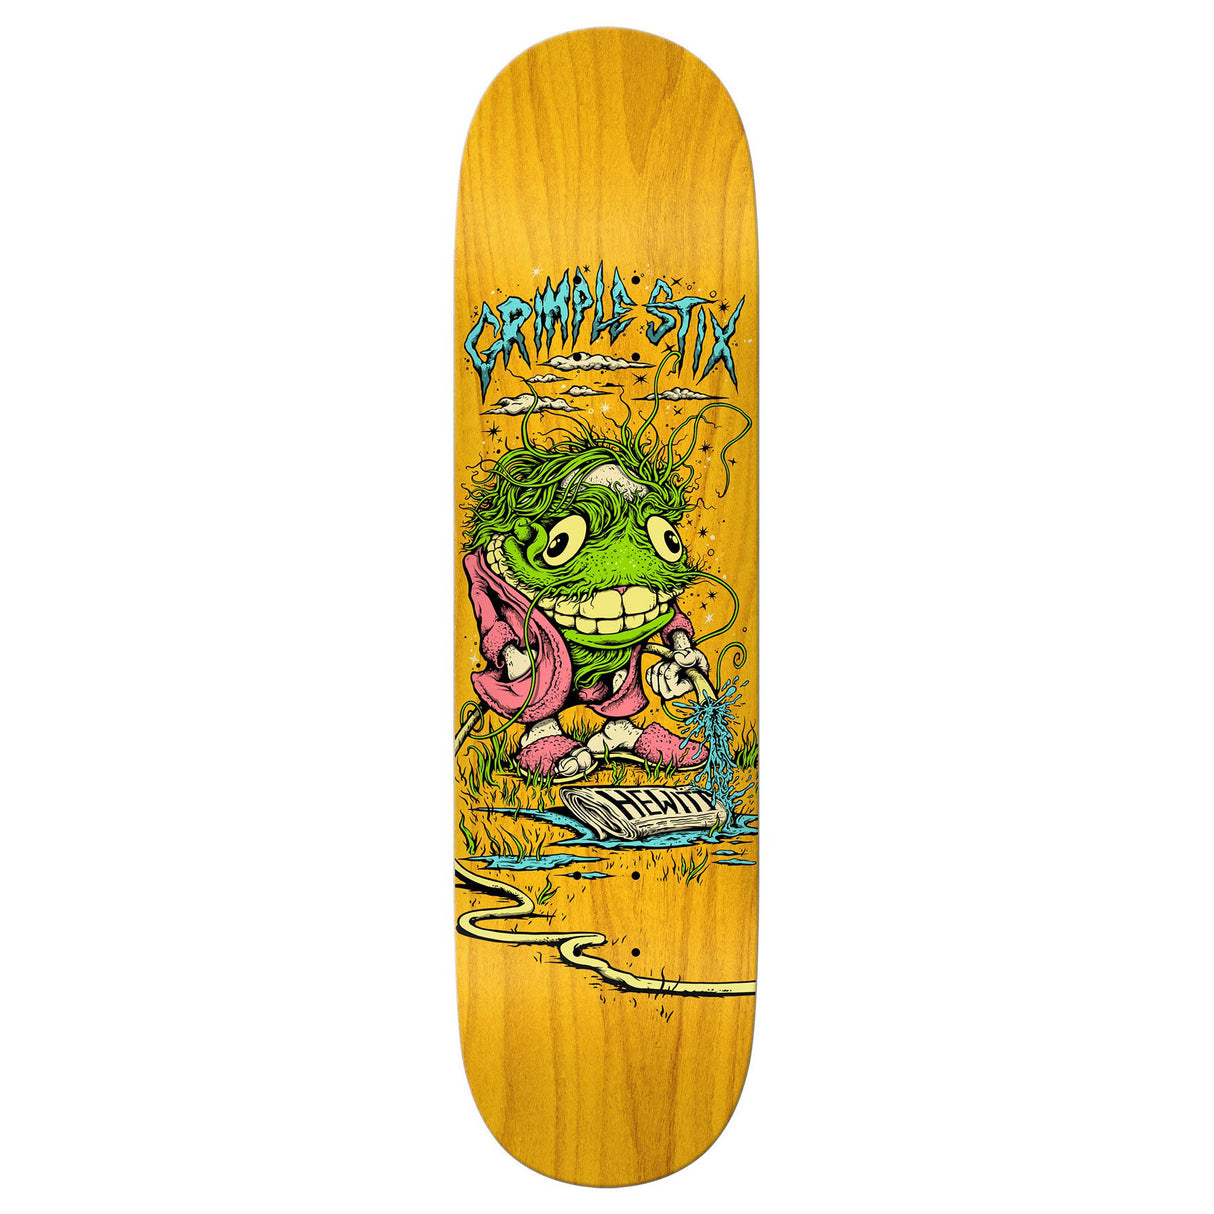 Anti-Hero Hewitt Grimple in Character 8.4" Assorted Stain Skateboard Deck